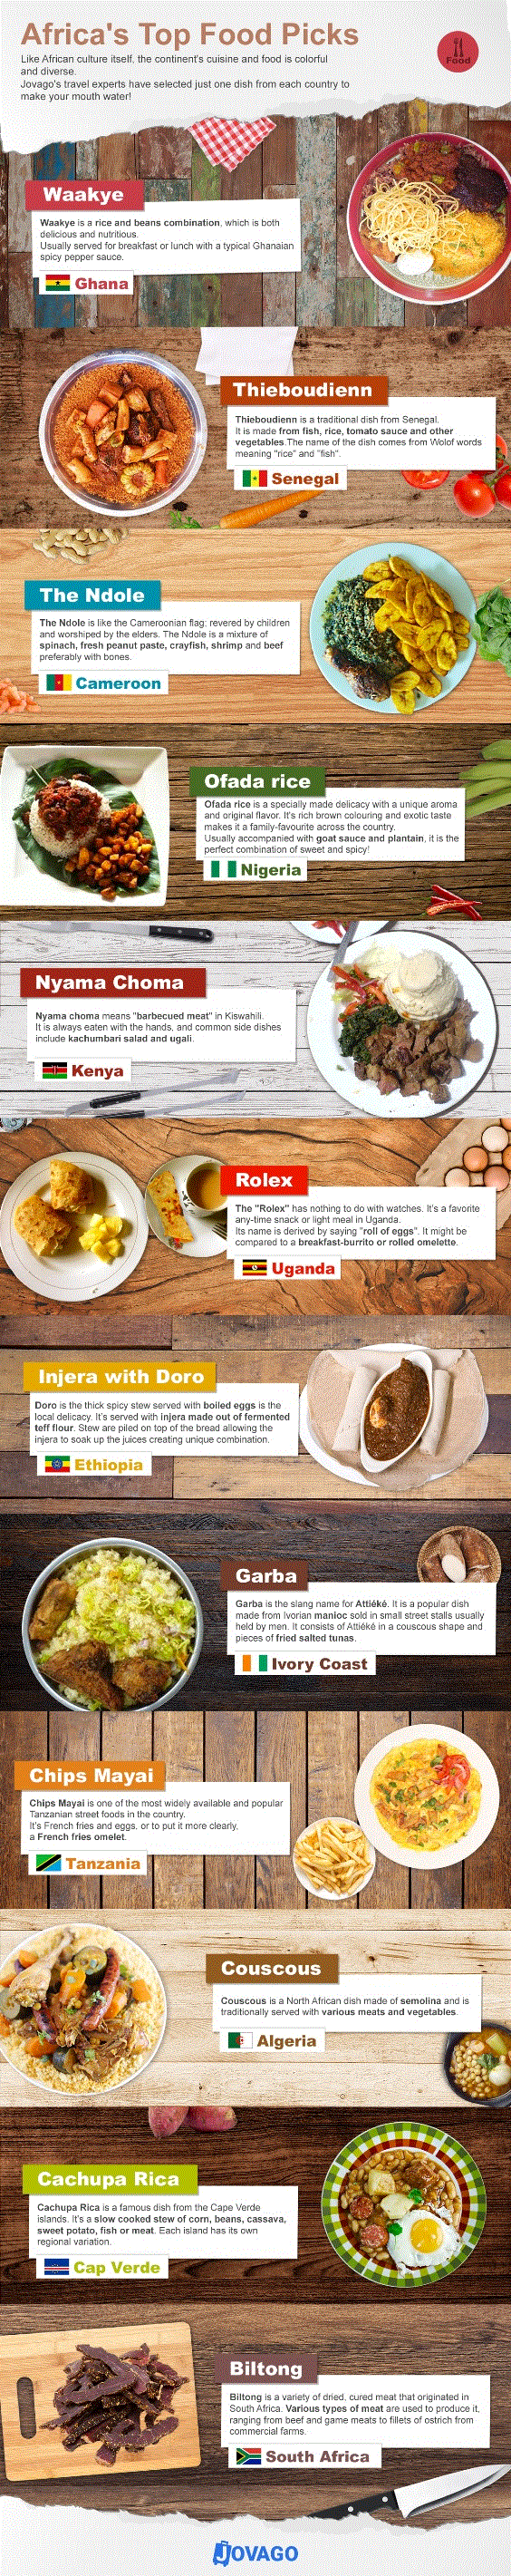 Africa's top food picks